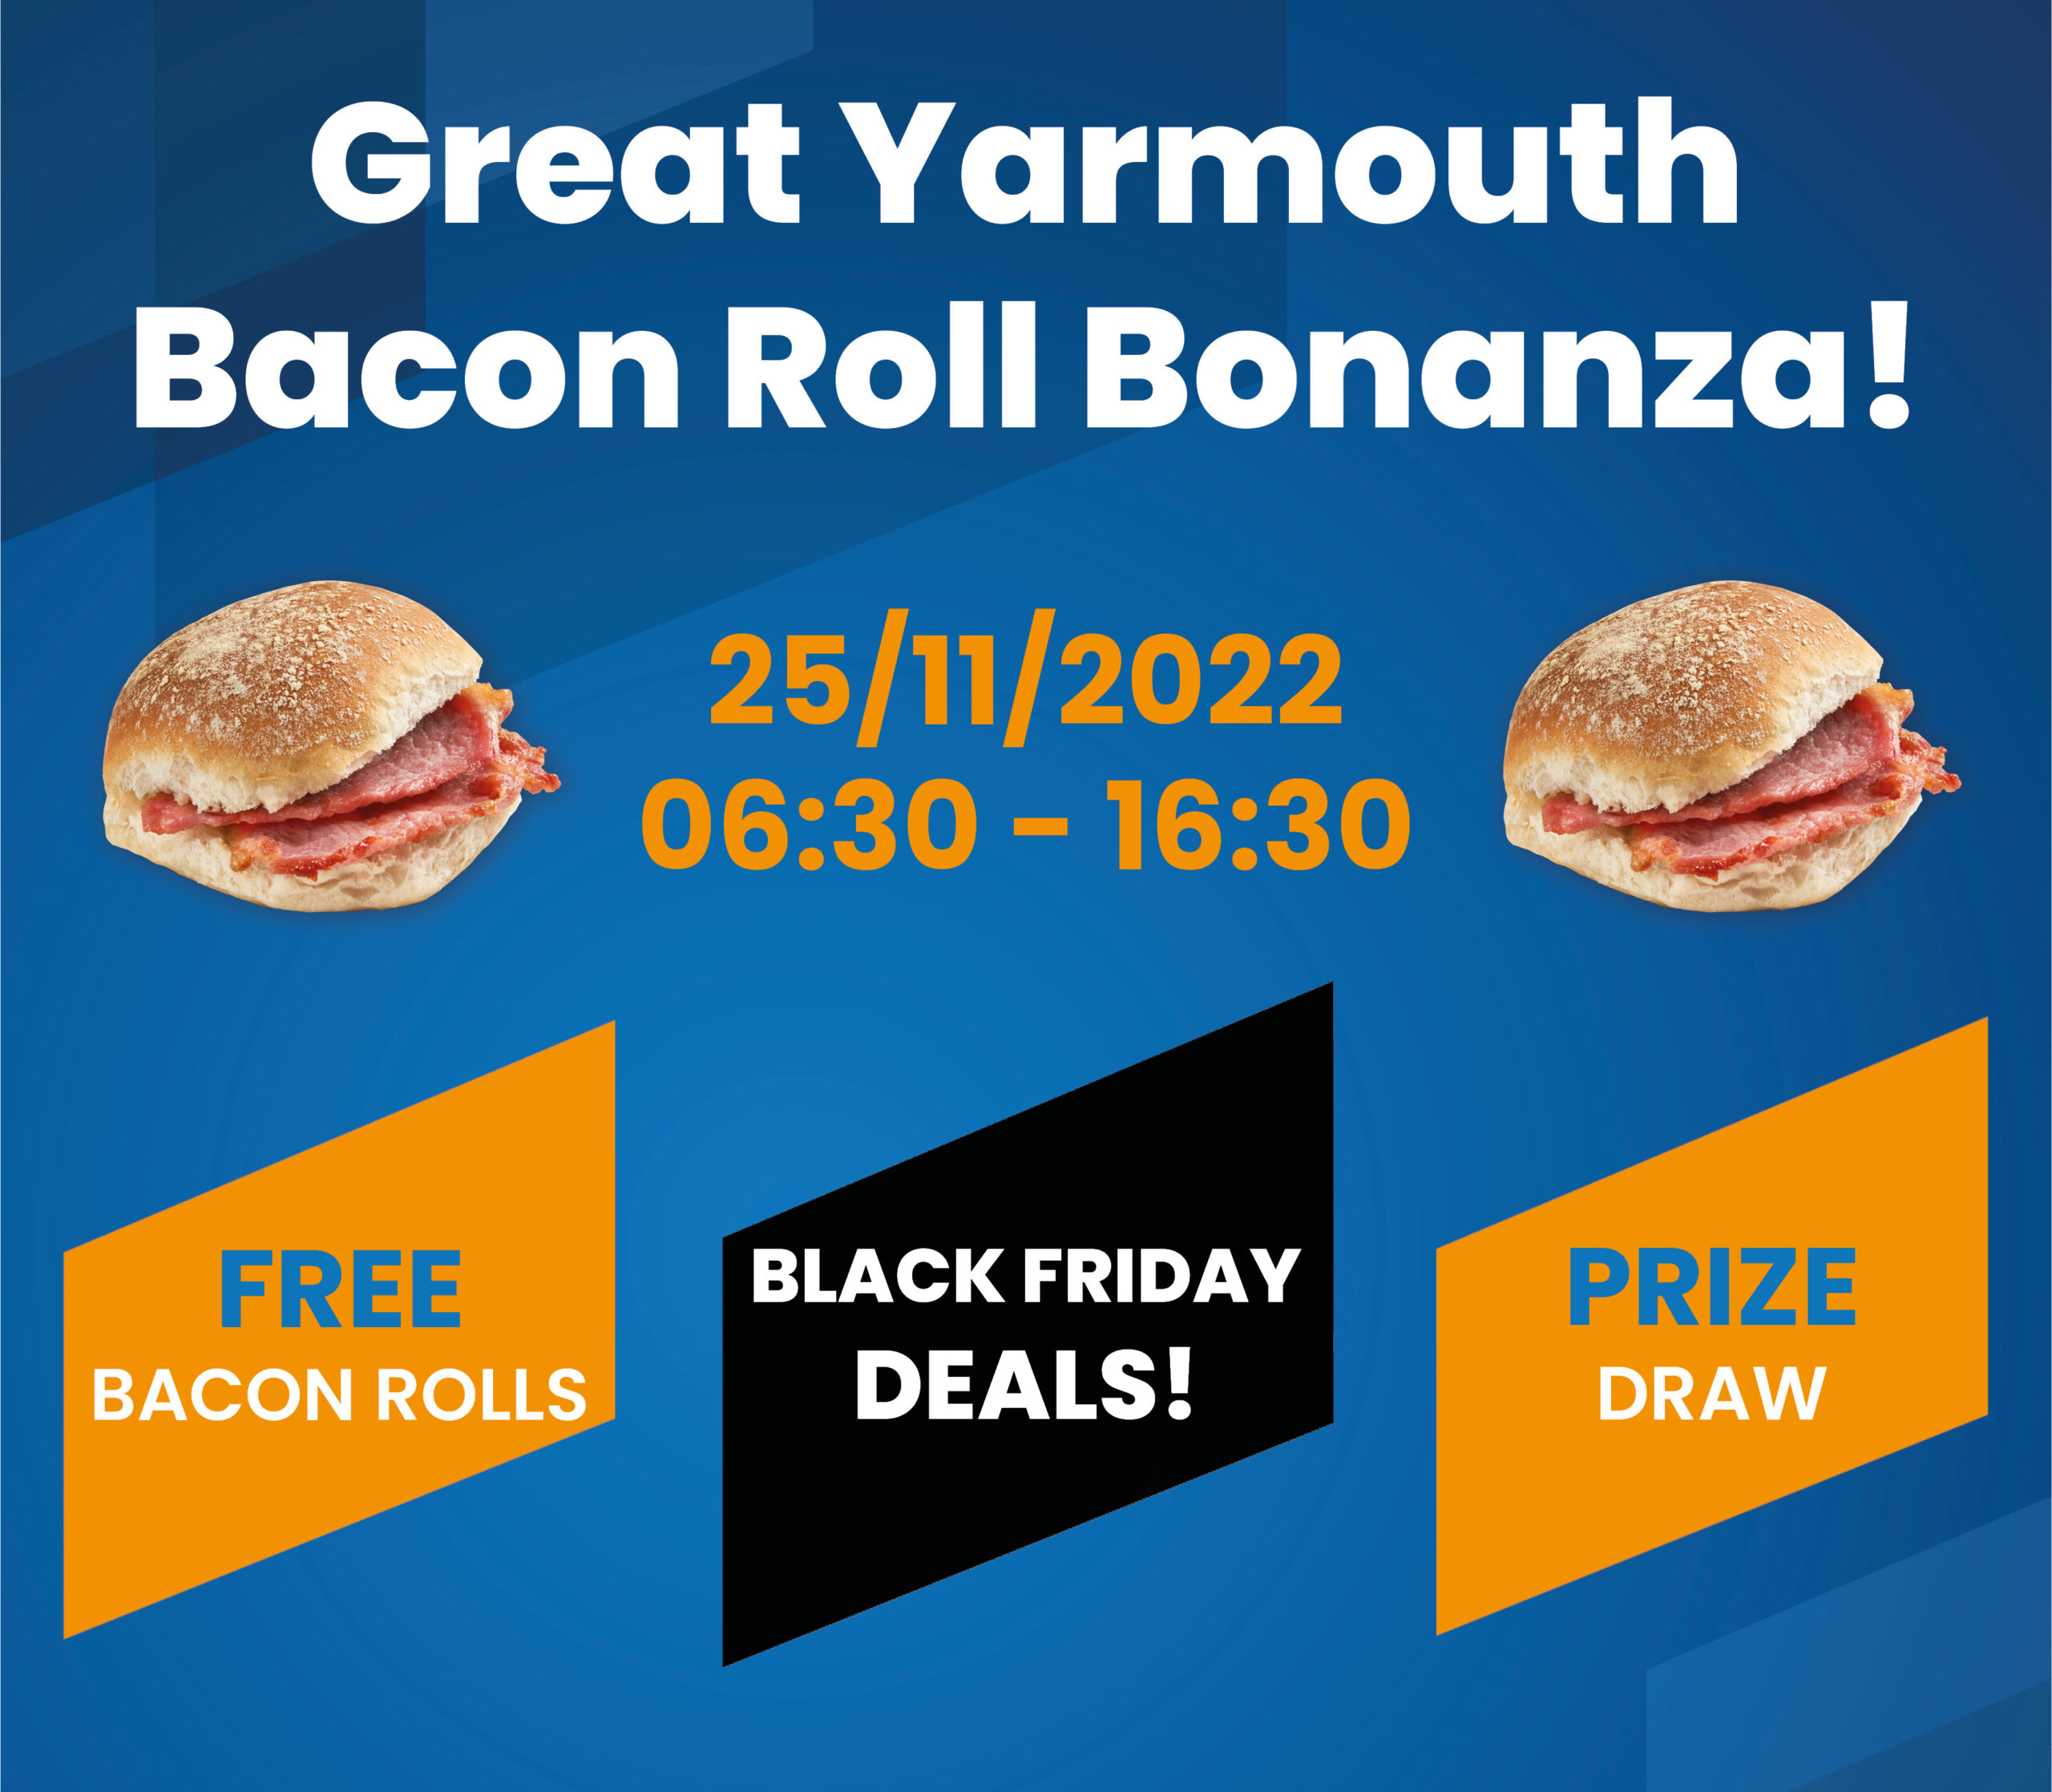 Great Yarmouth Bacon Roll Bonanza